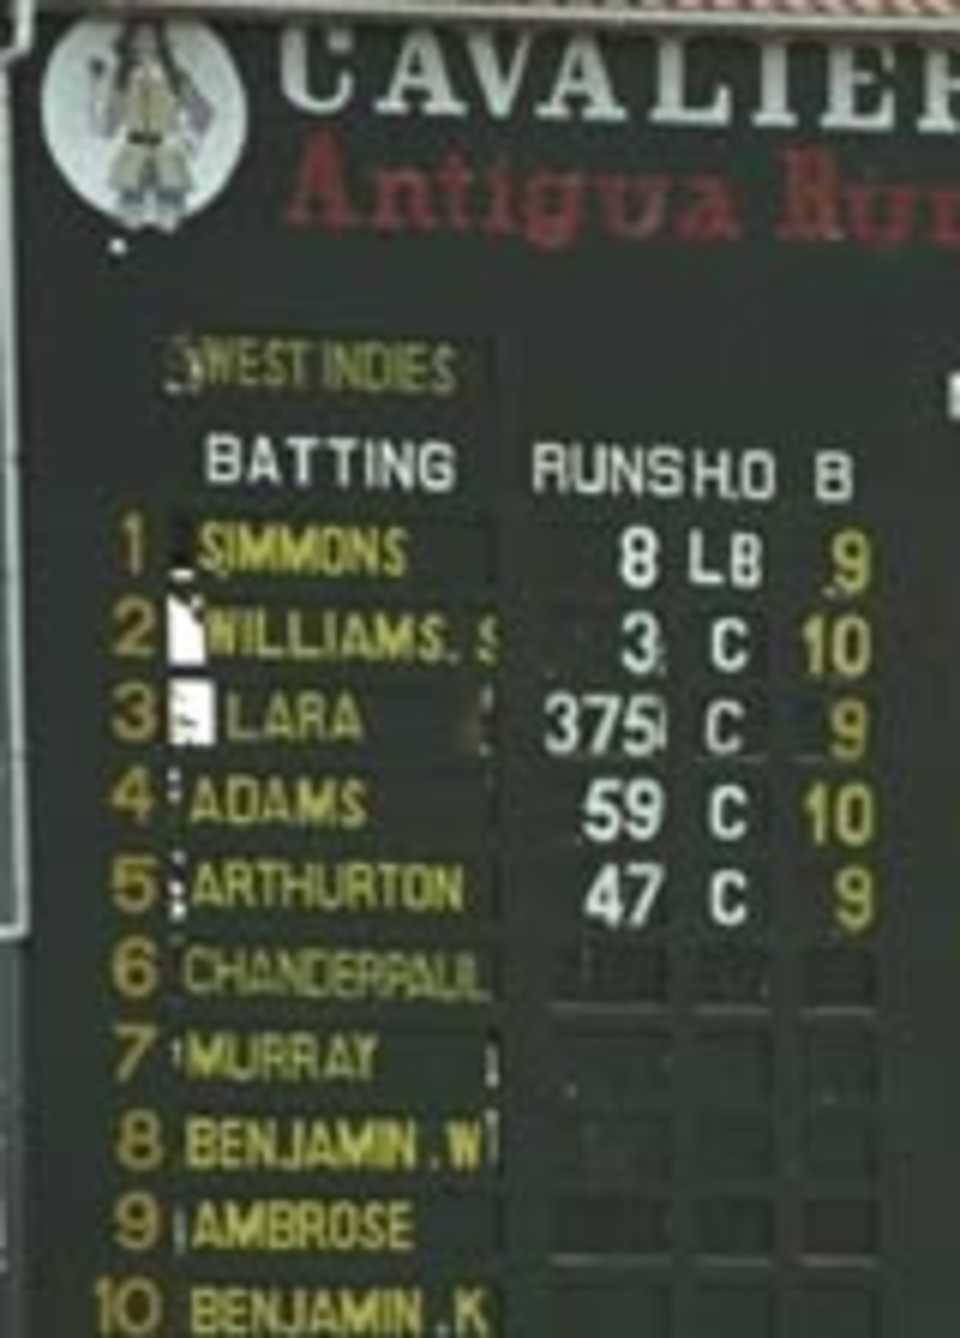 The scoreboard shows Brian Lara on 375